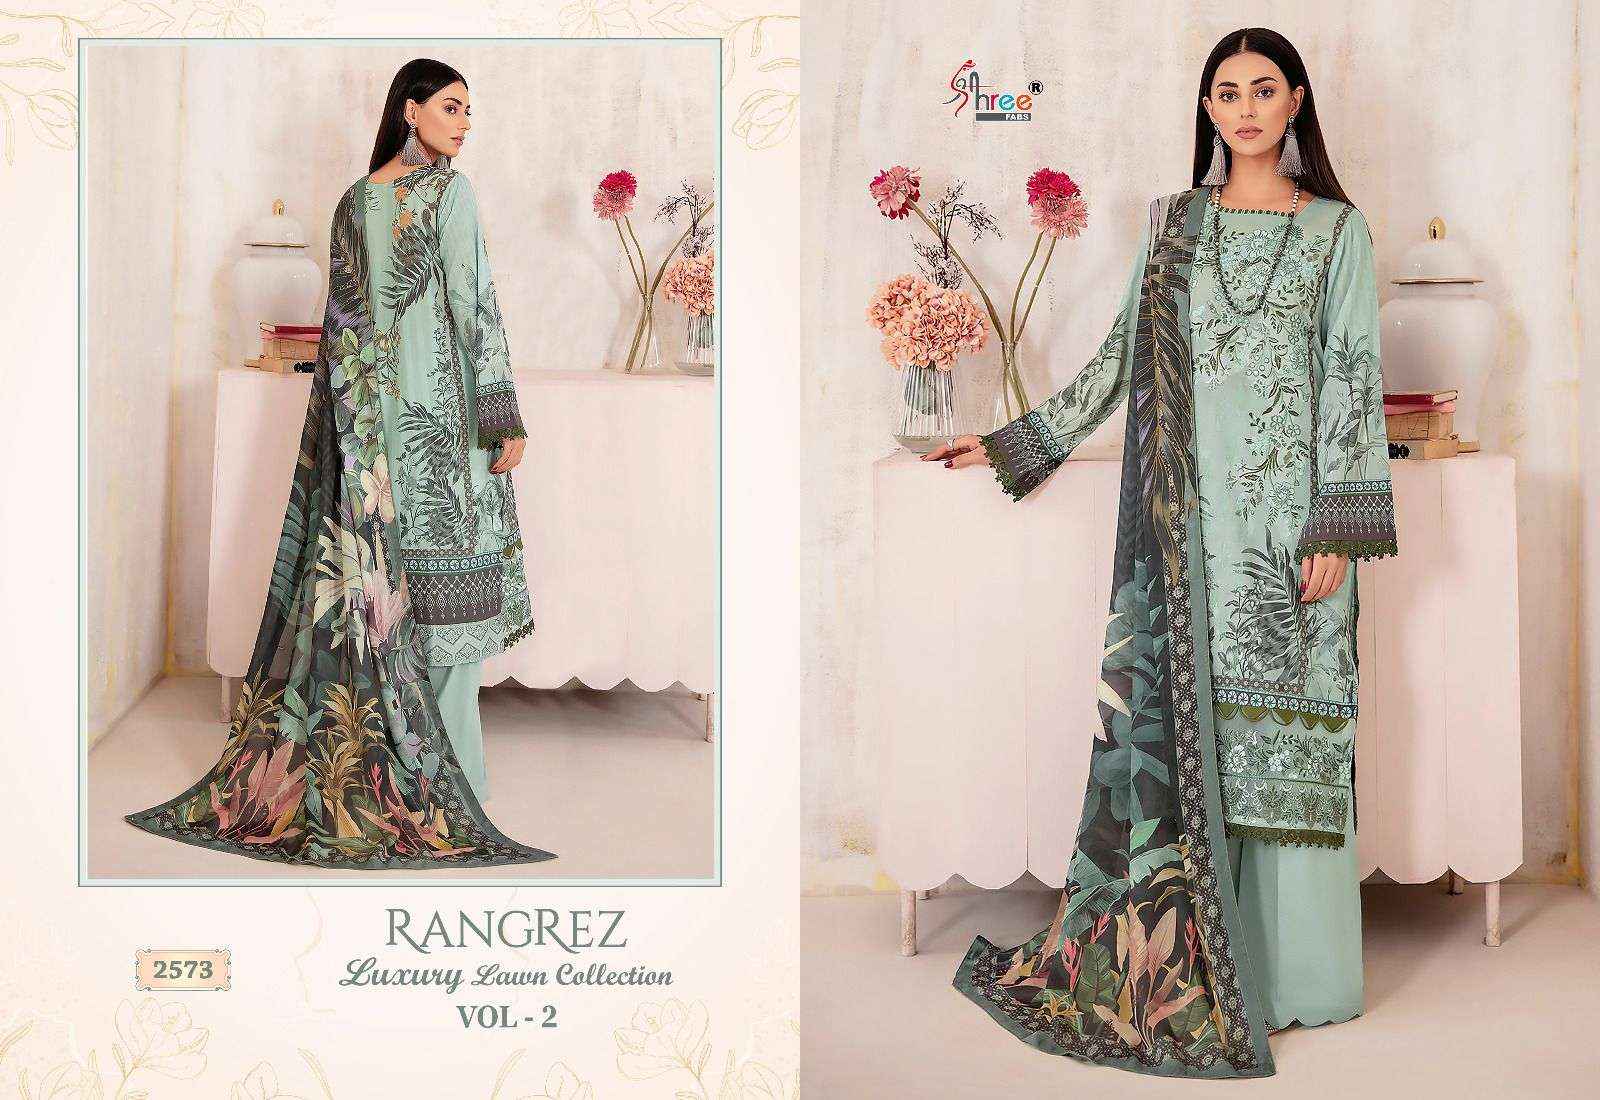 Shree Fabs Rangrez Luxury Lawn Collection Vol 2 Lawn Cotton Dress Material 8 pcs Catalogue